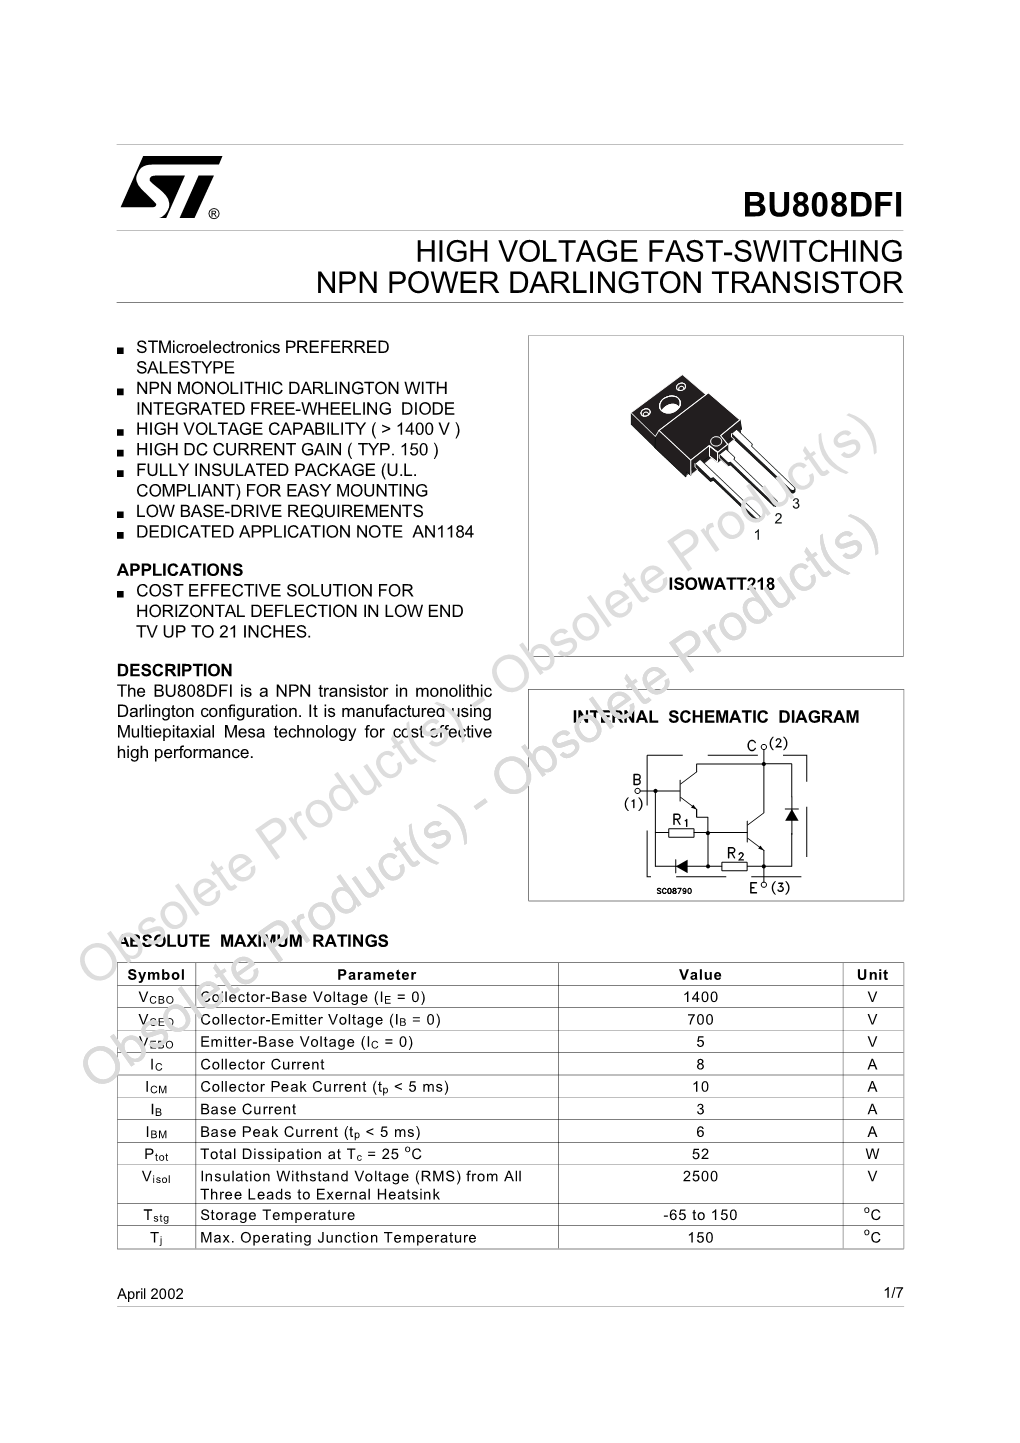 High Voltage Fast-Switching Npn Power Darlington Transistor